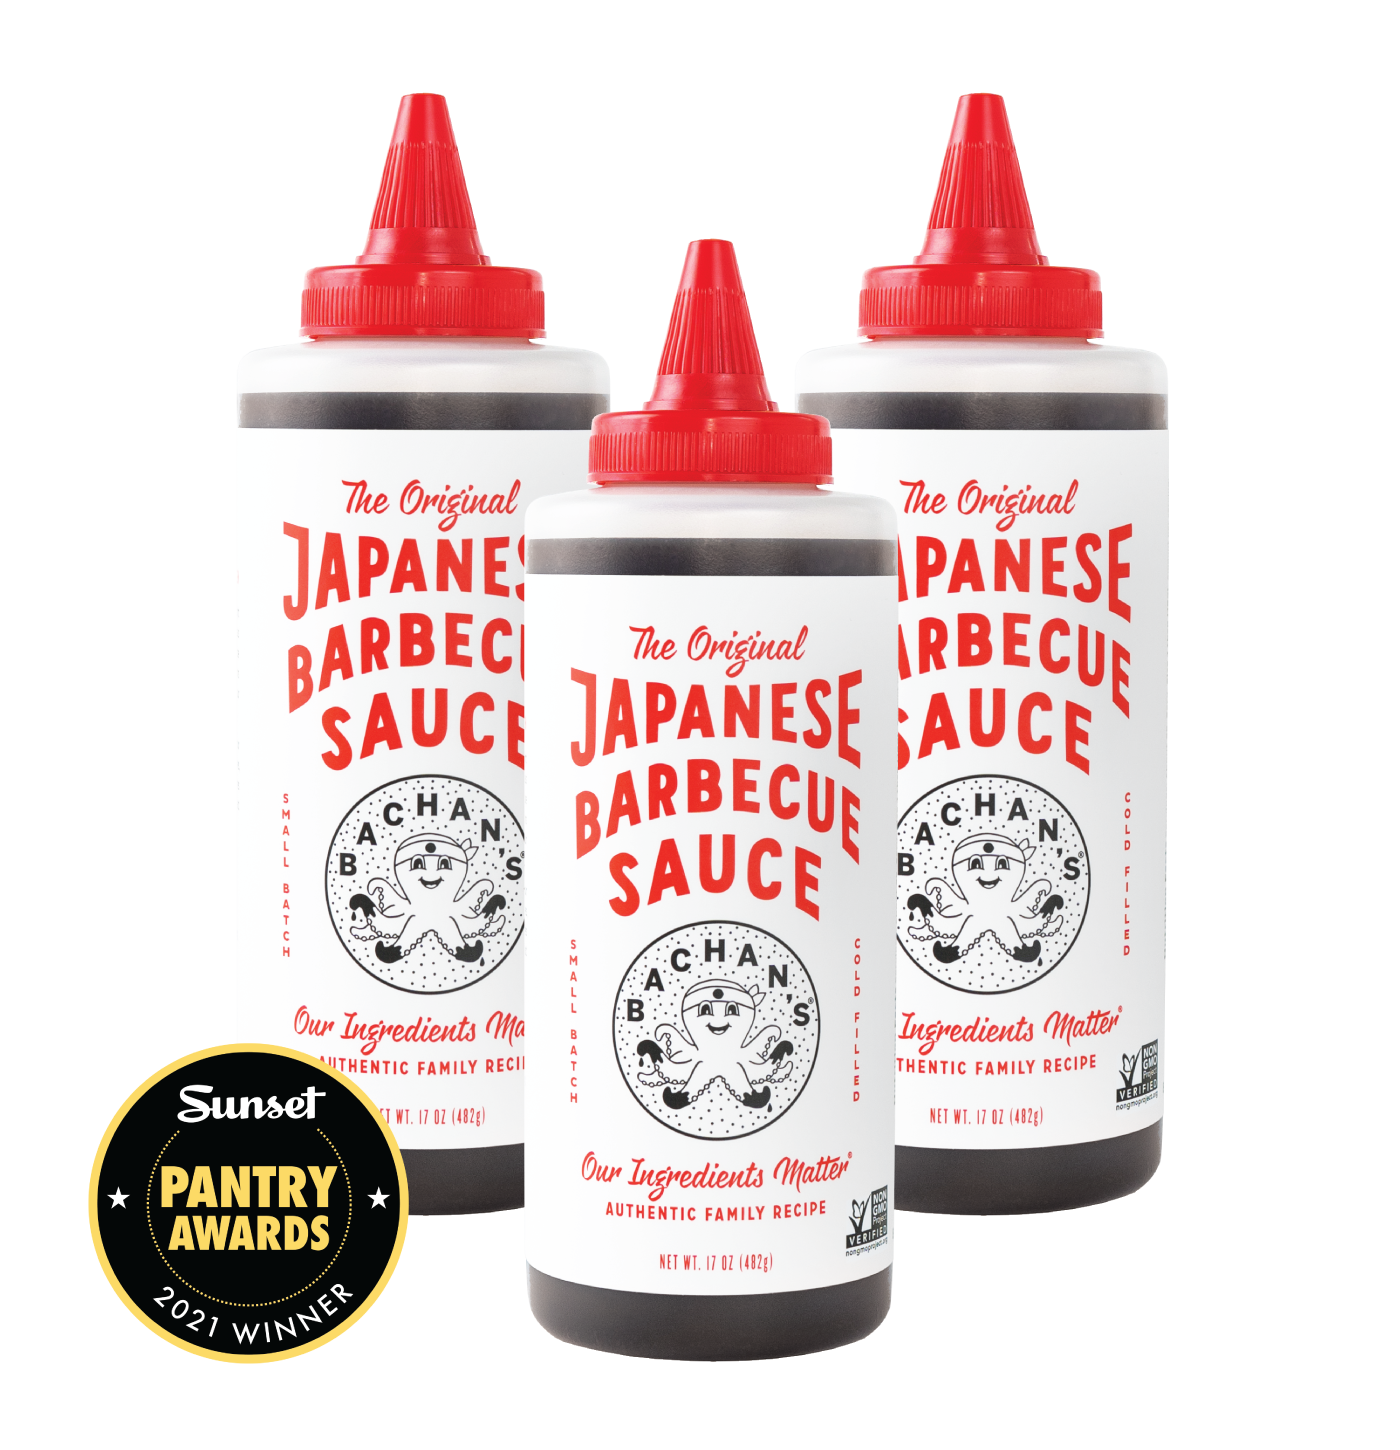 The Original Japanese Barbecue Sauce  Bachan